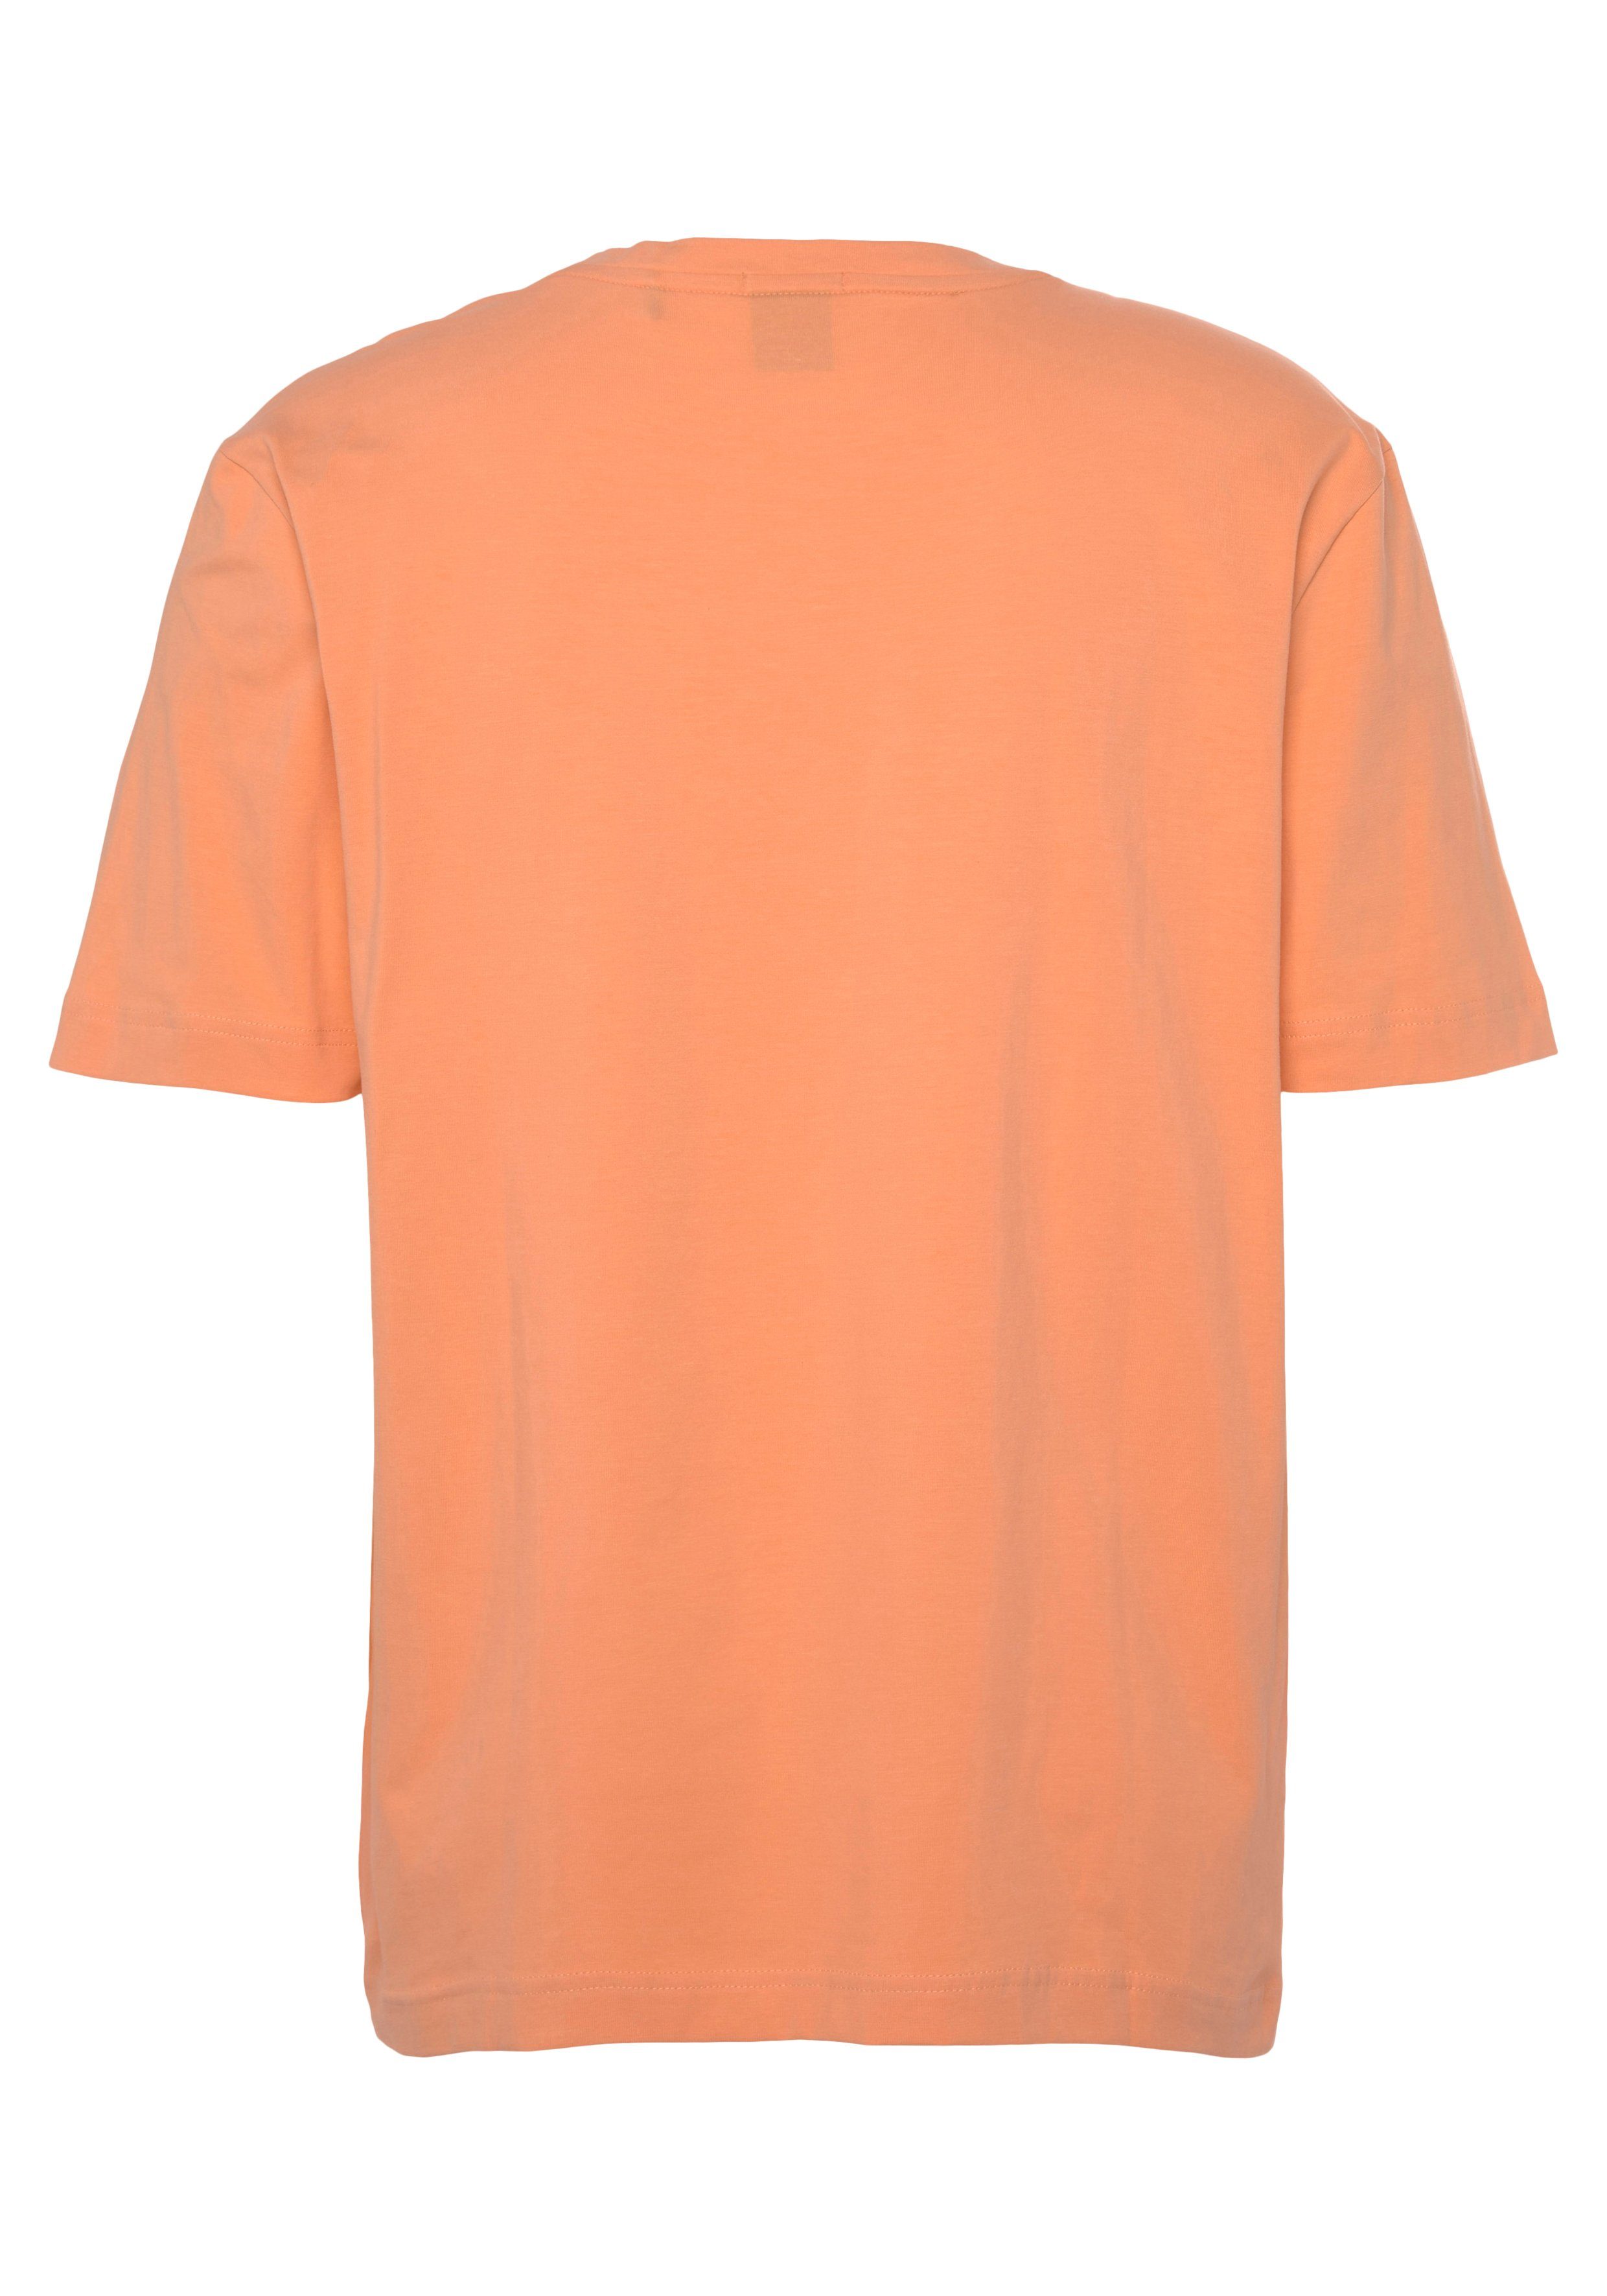 BOSS-Logodruck light/Pastel_orange auf BOSS TChup mit ORANGE Kurzarmshirt der Brust